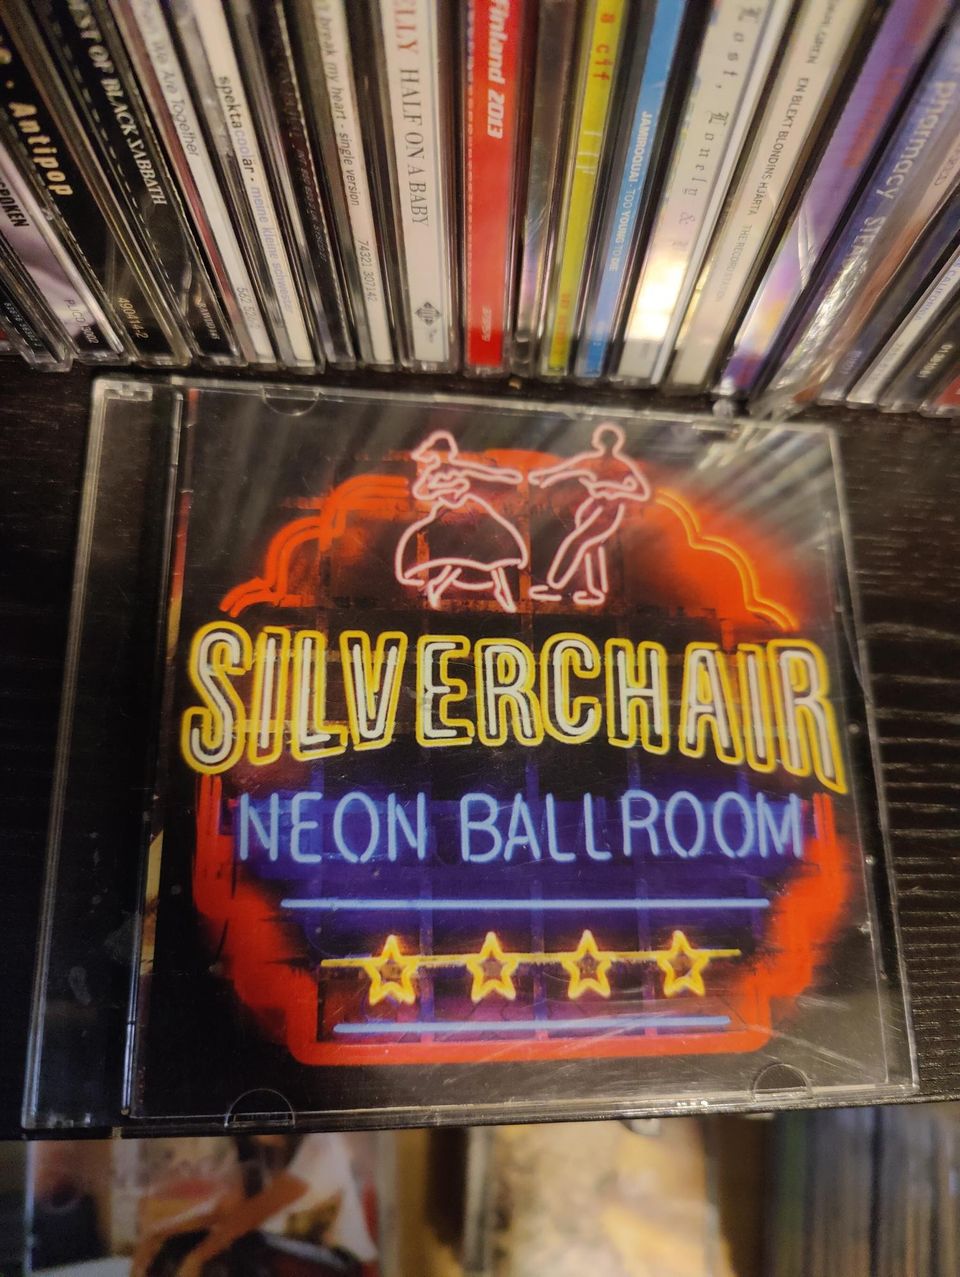 Silverchair cds?.